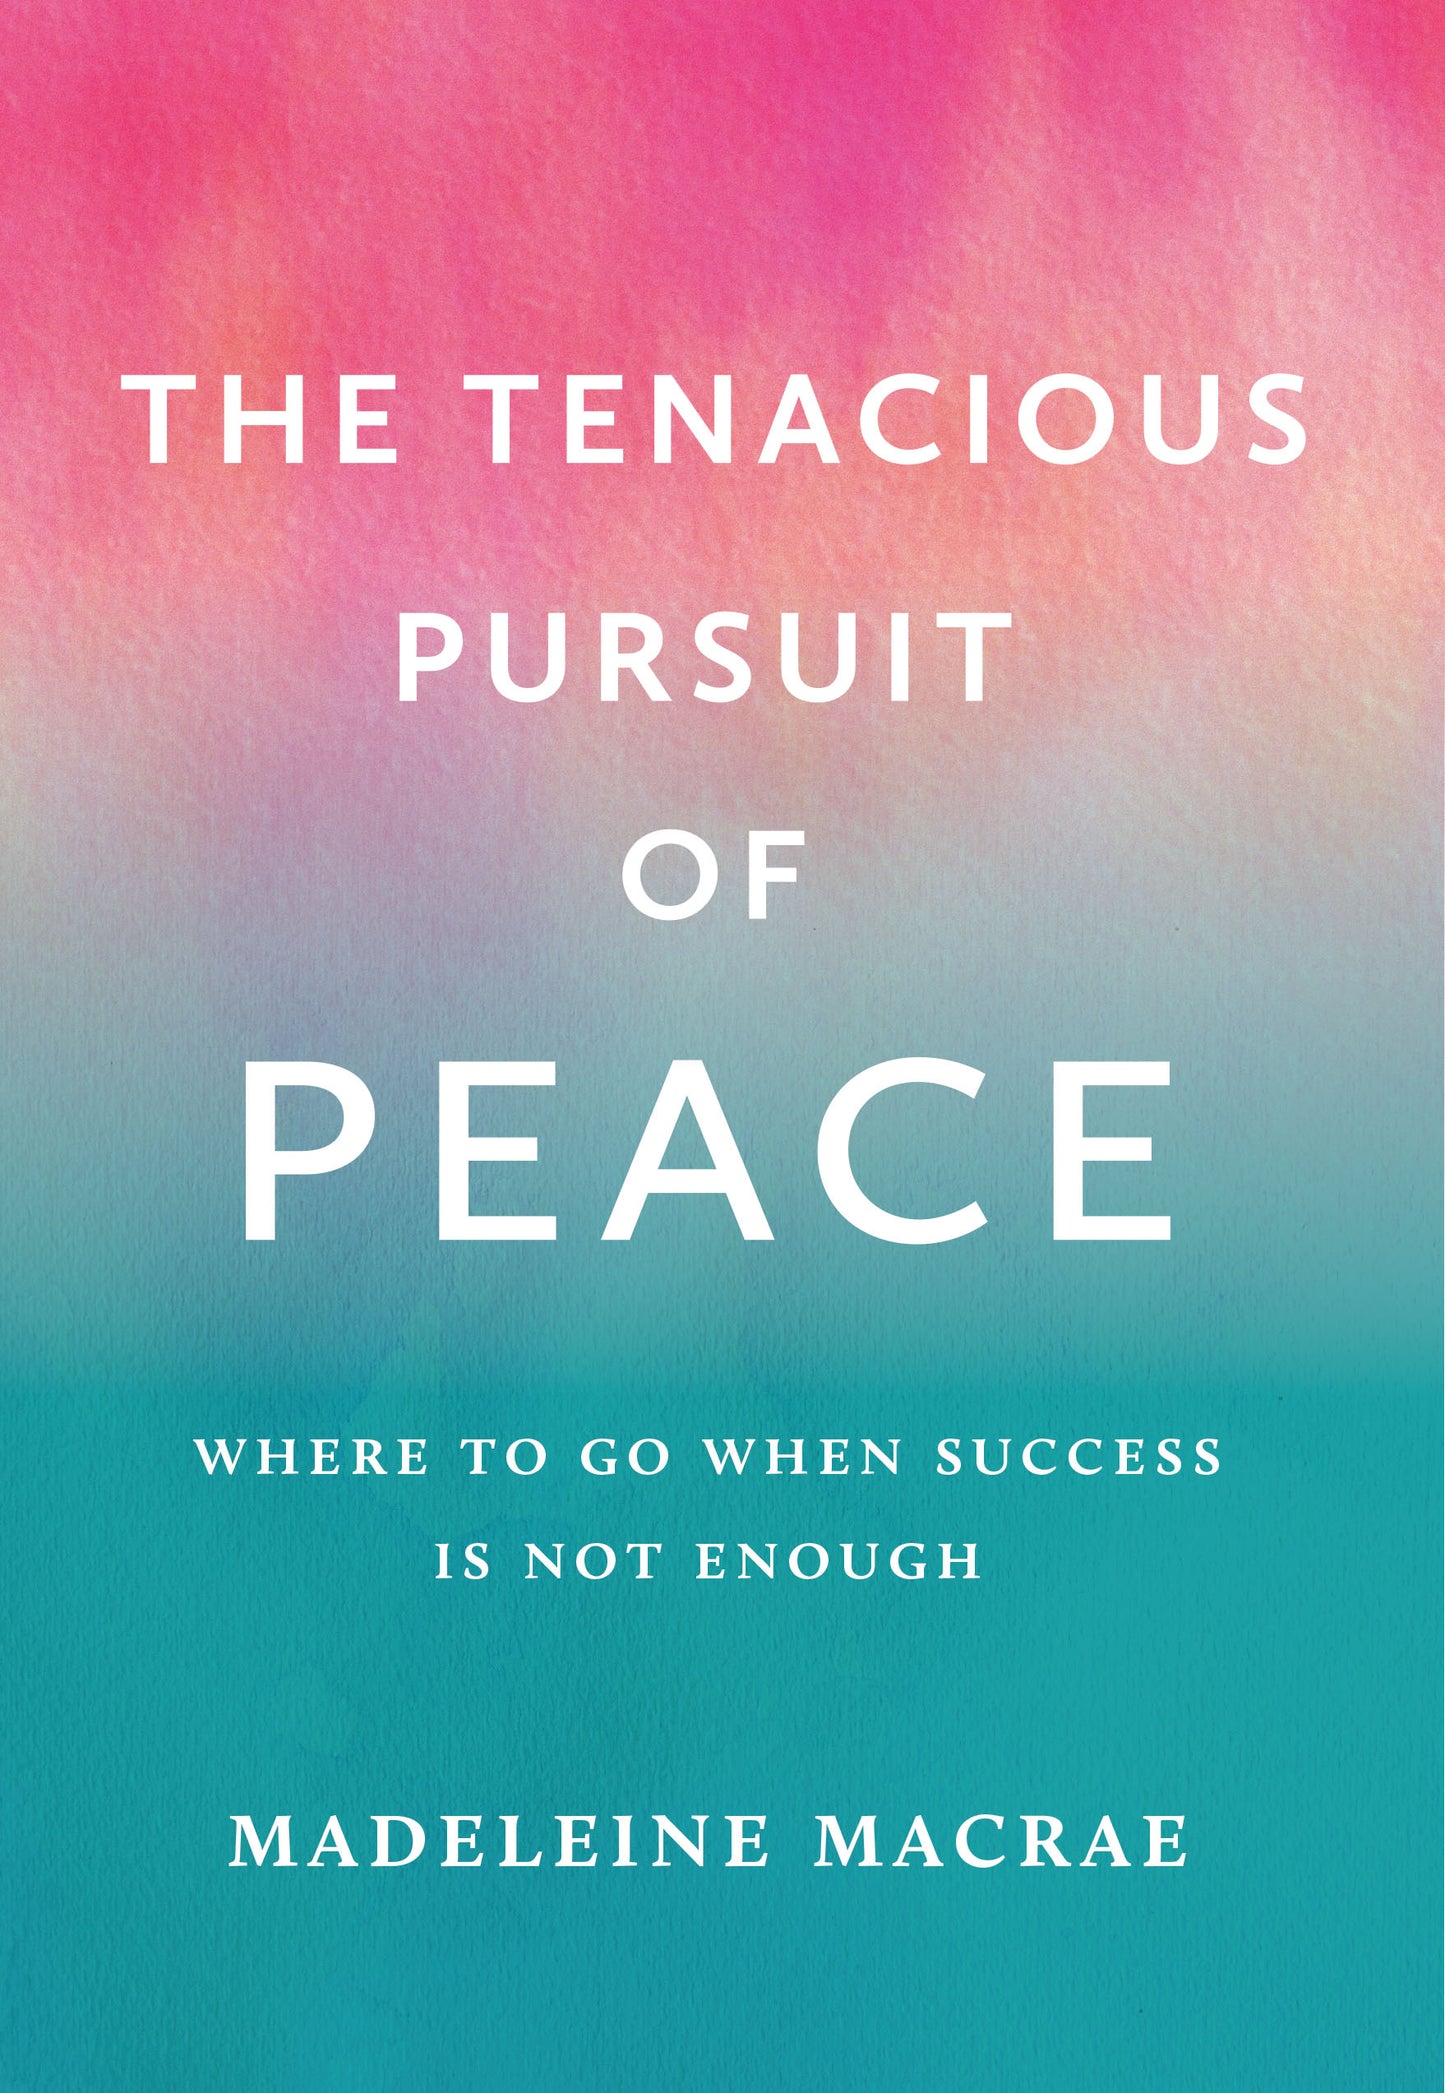 The Tenacious Pursuit of Peace